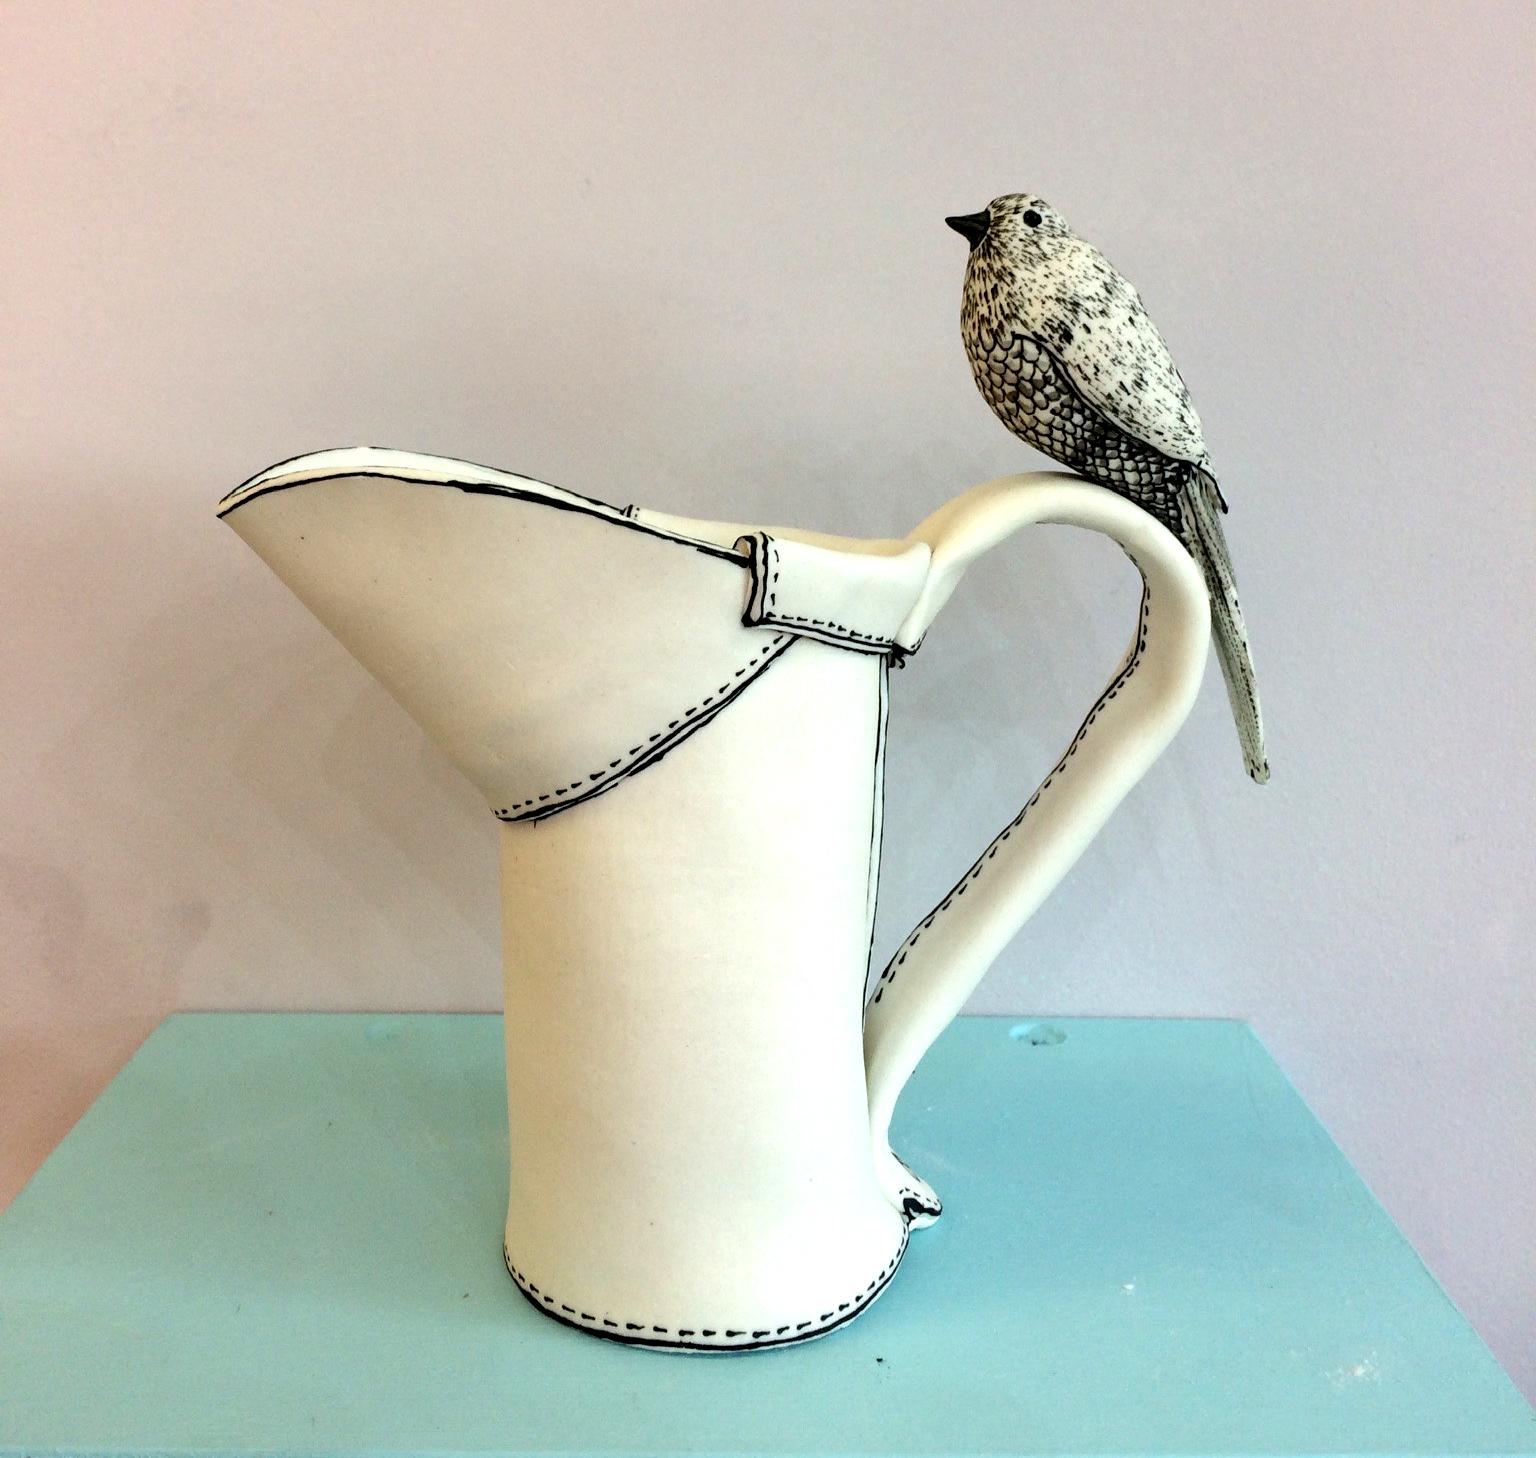 Katharine Morling Still-Life Sculpture - "Bird on a Jug I" porcelain, black and white stain ceramic sculpture - pop art